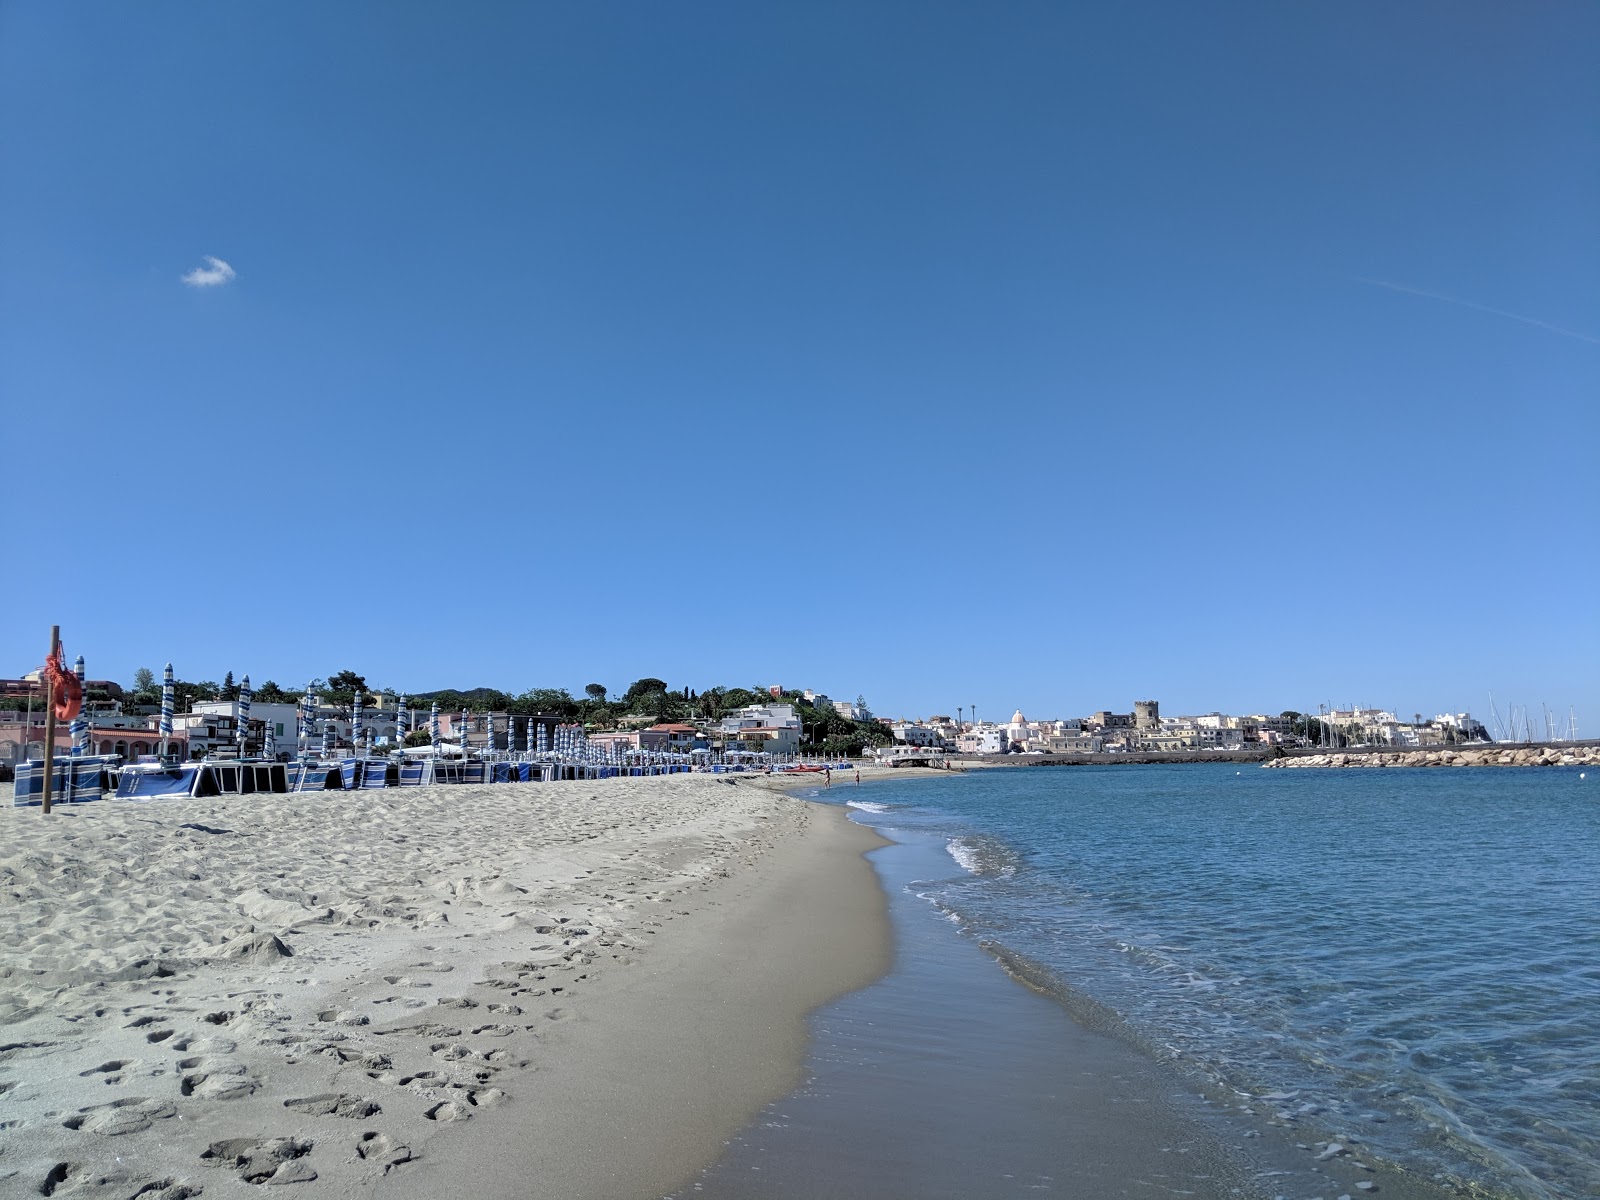 Foto af Spiaggia della Chiaia med lys fint sand overflade